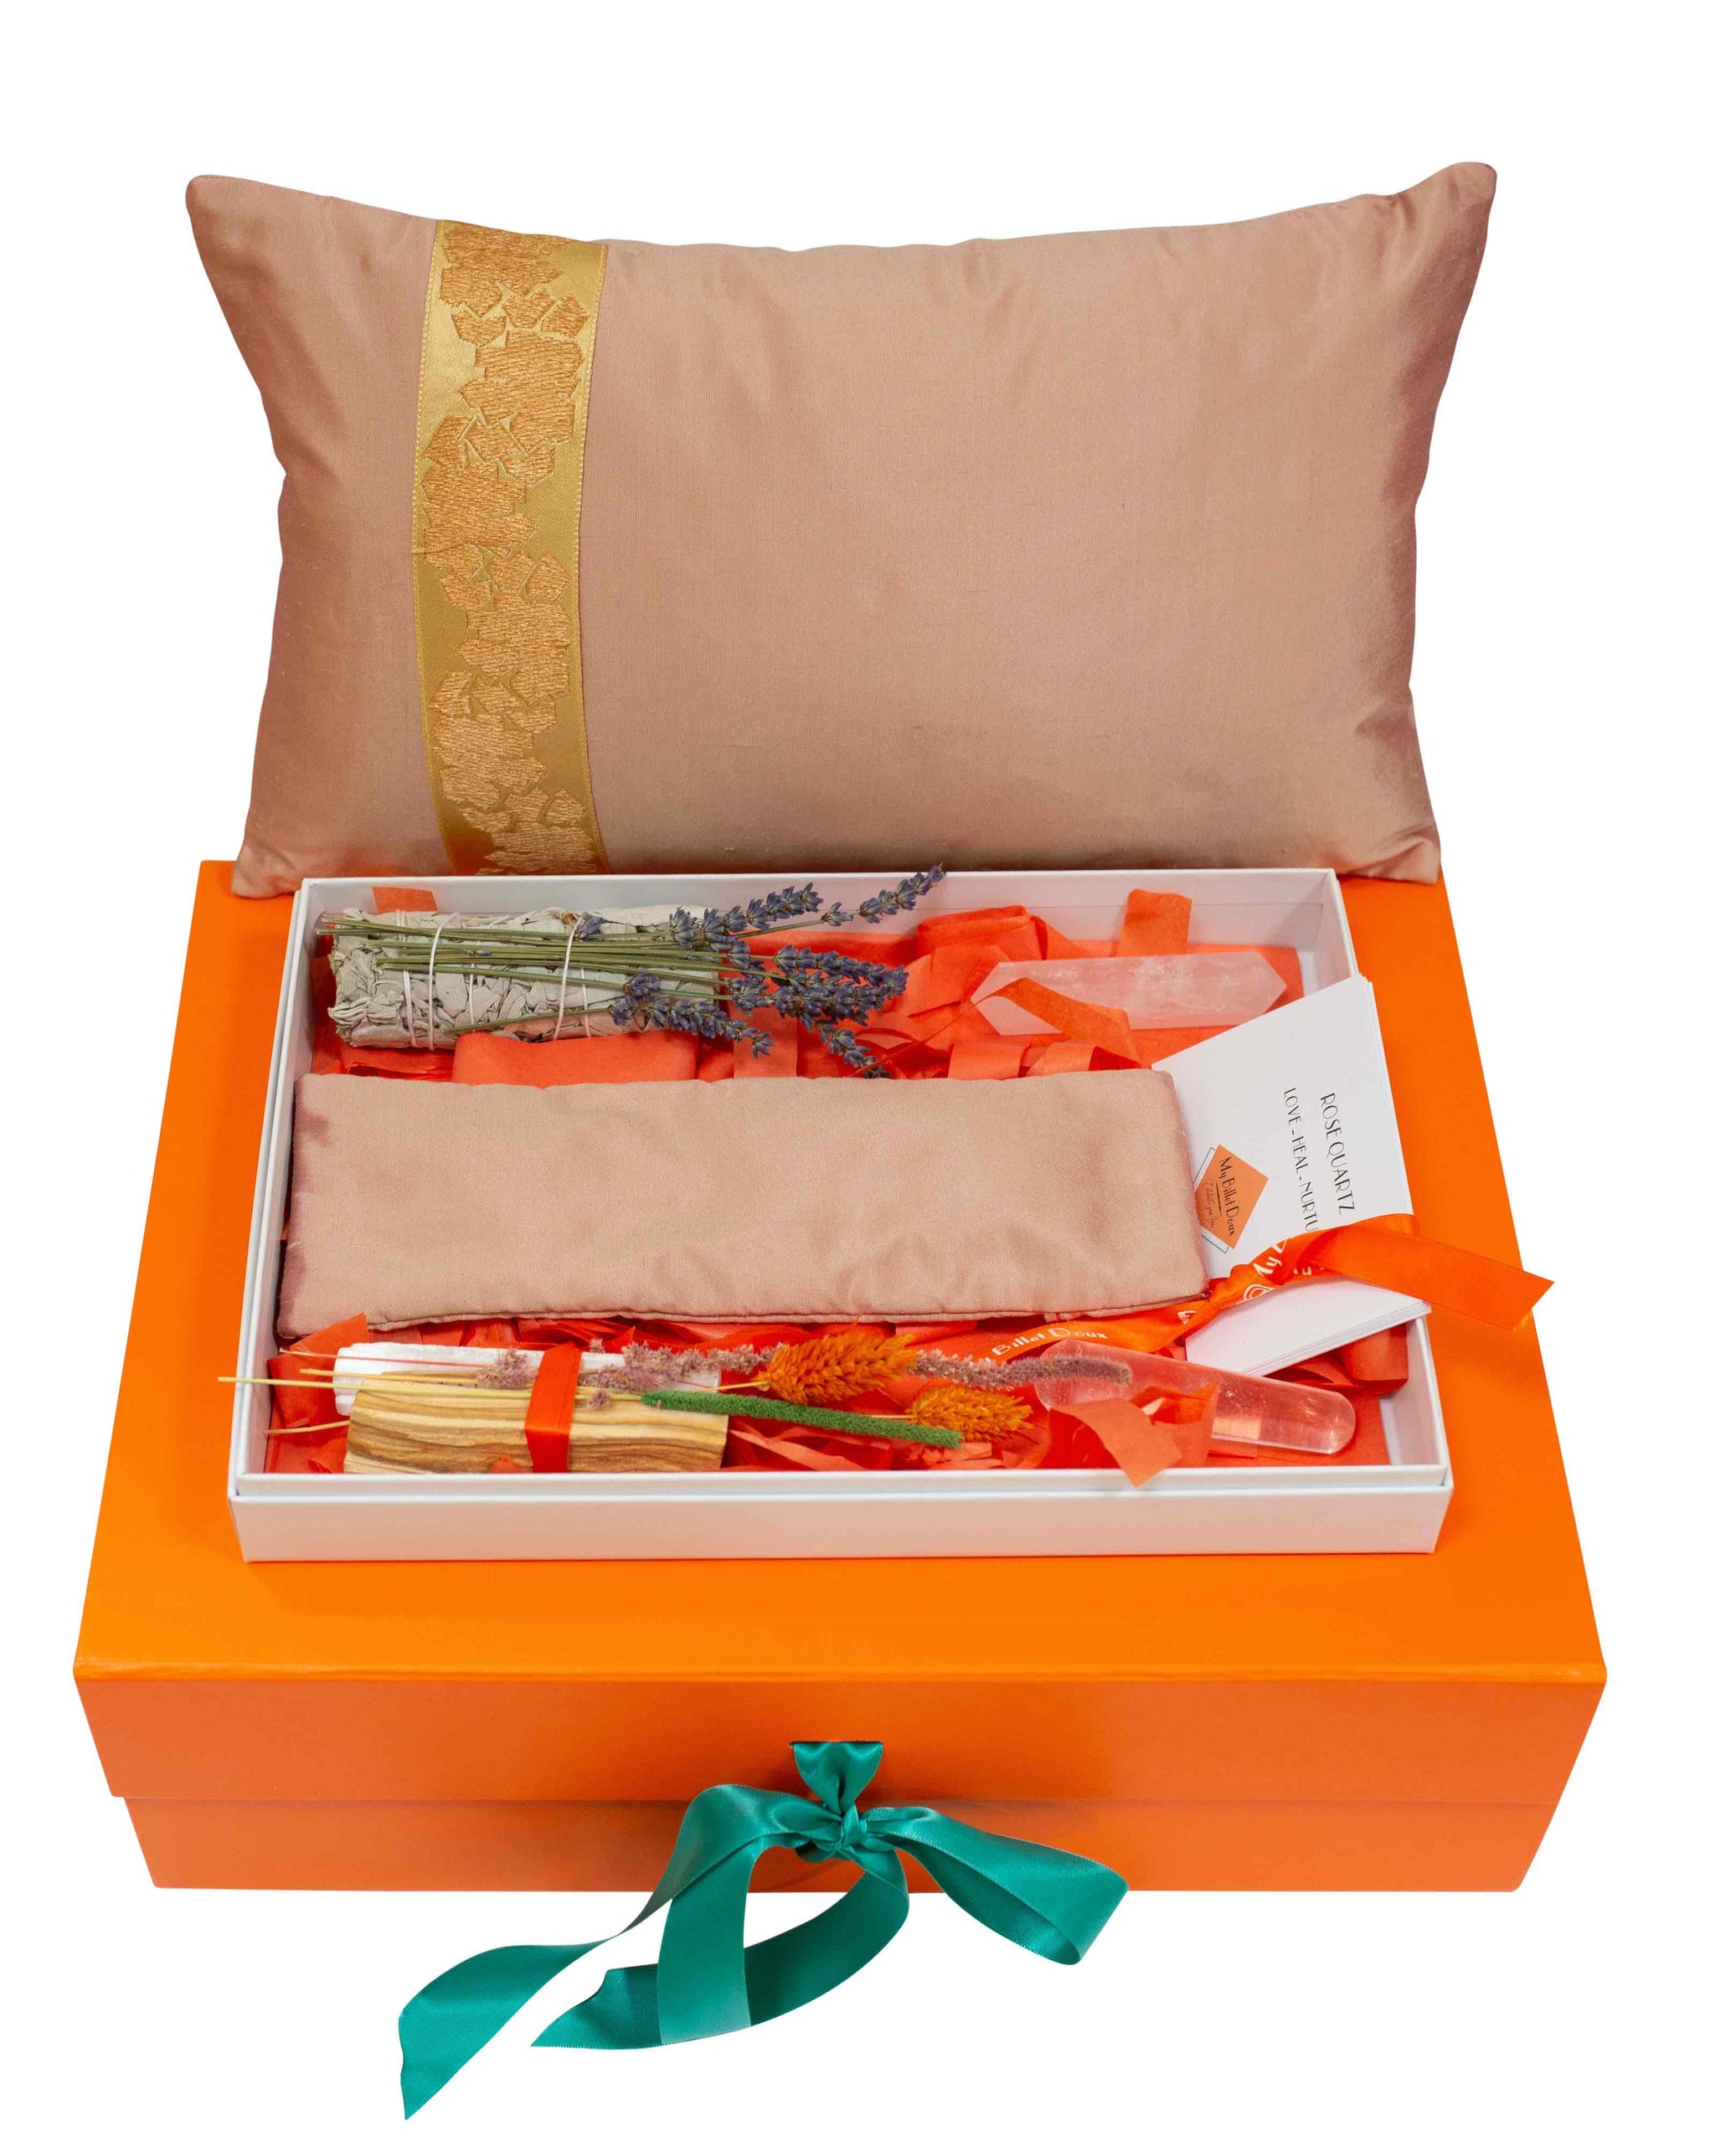 Rituel gift box  "Fragment" Sunset pink silk cushion set with rose quartz